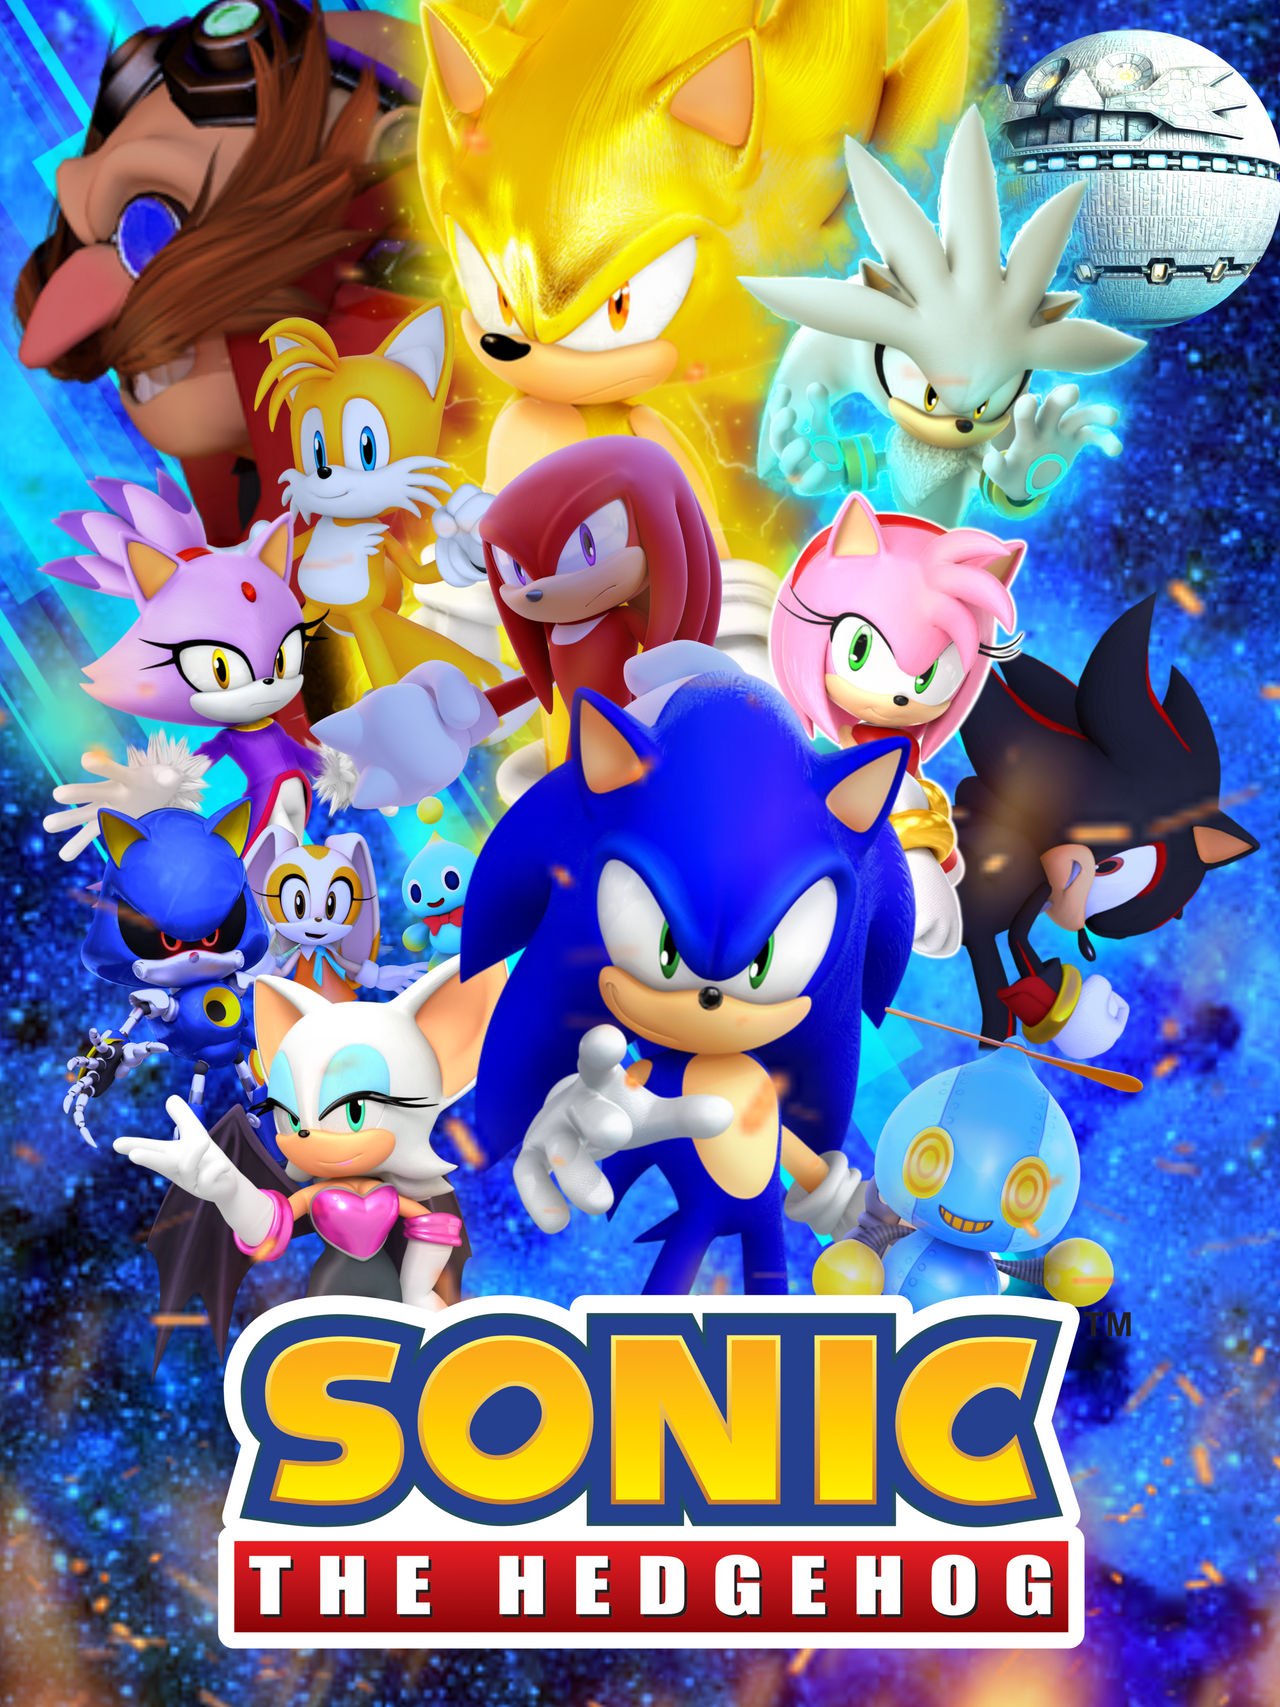 Sonic Movie 3 Poster by Mariorainbow6 on DeviantArt